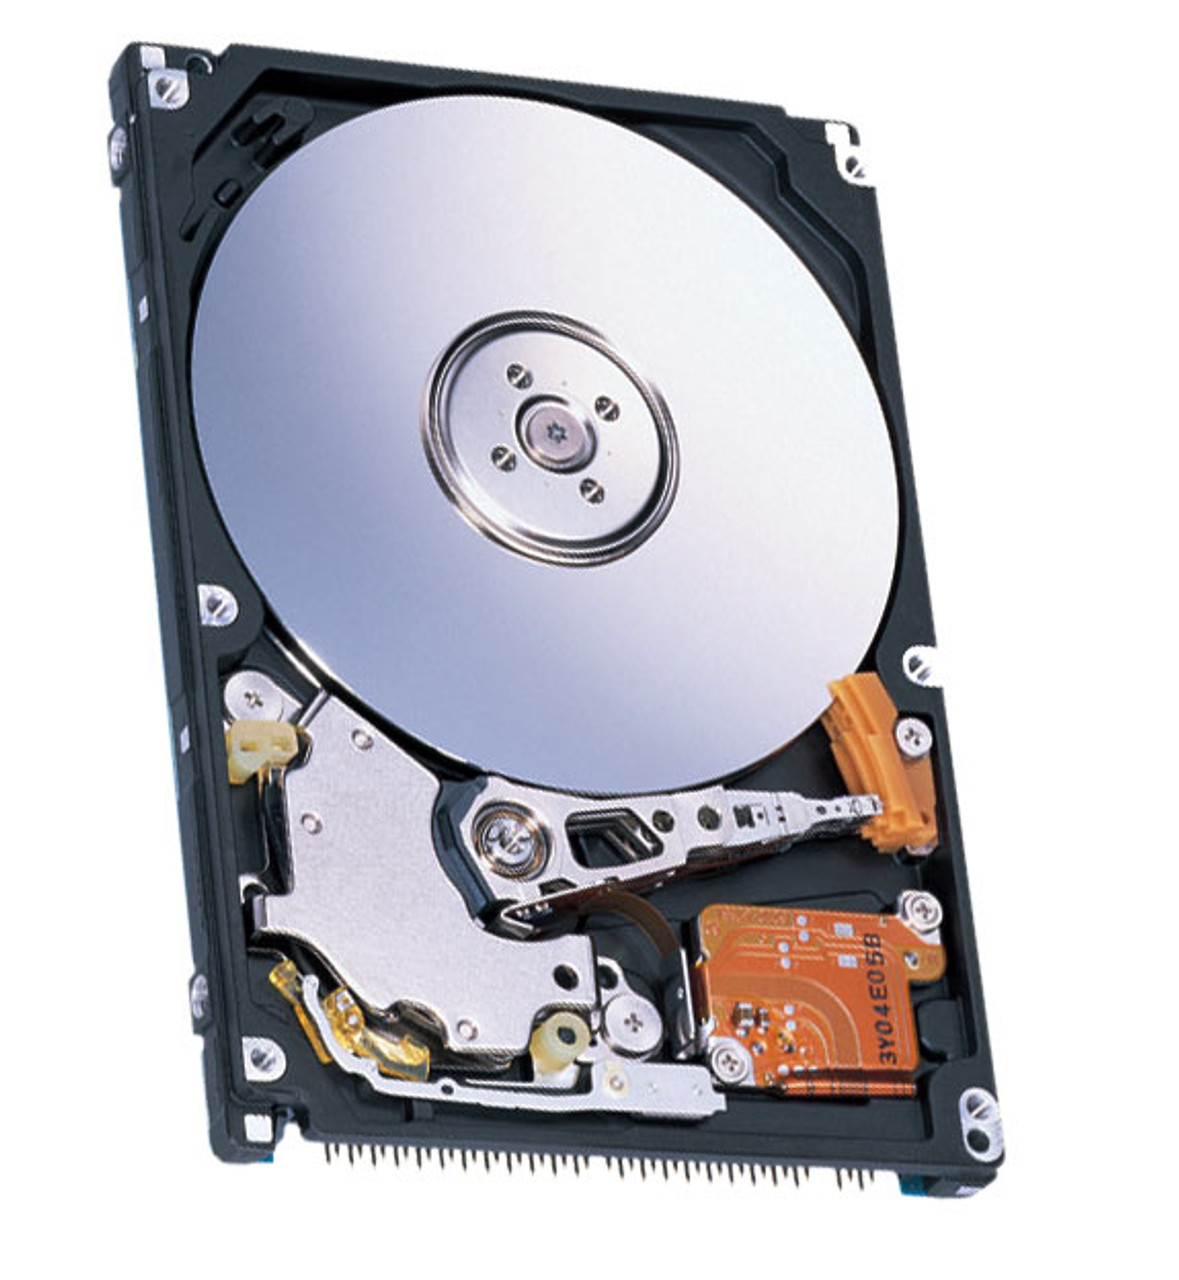 MHT2020AT - Fujitsu Mobile 20GB 4200RPM ATA-100 2MB Cache 2.5-inch Internal Hard Disk Drive